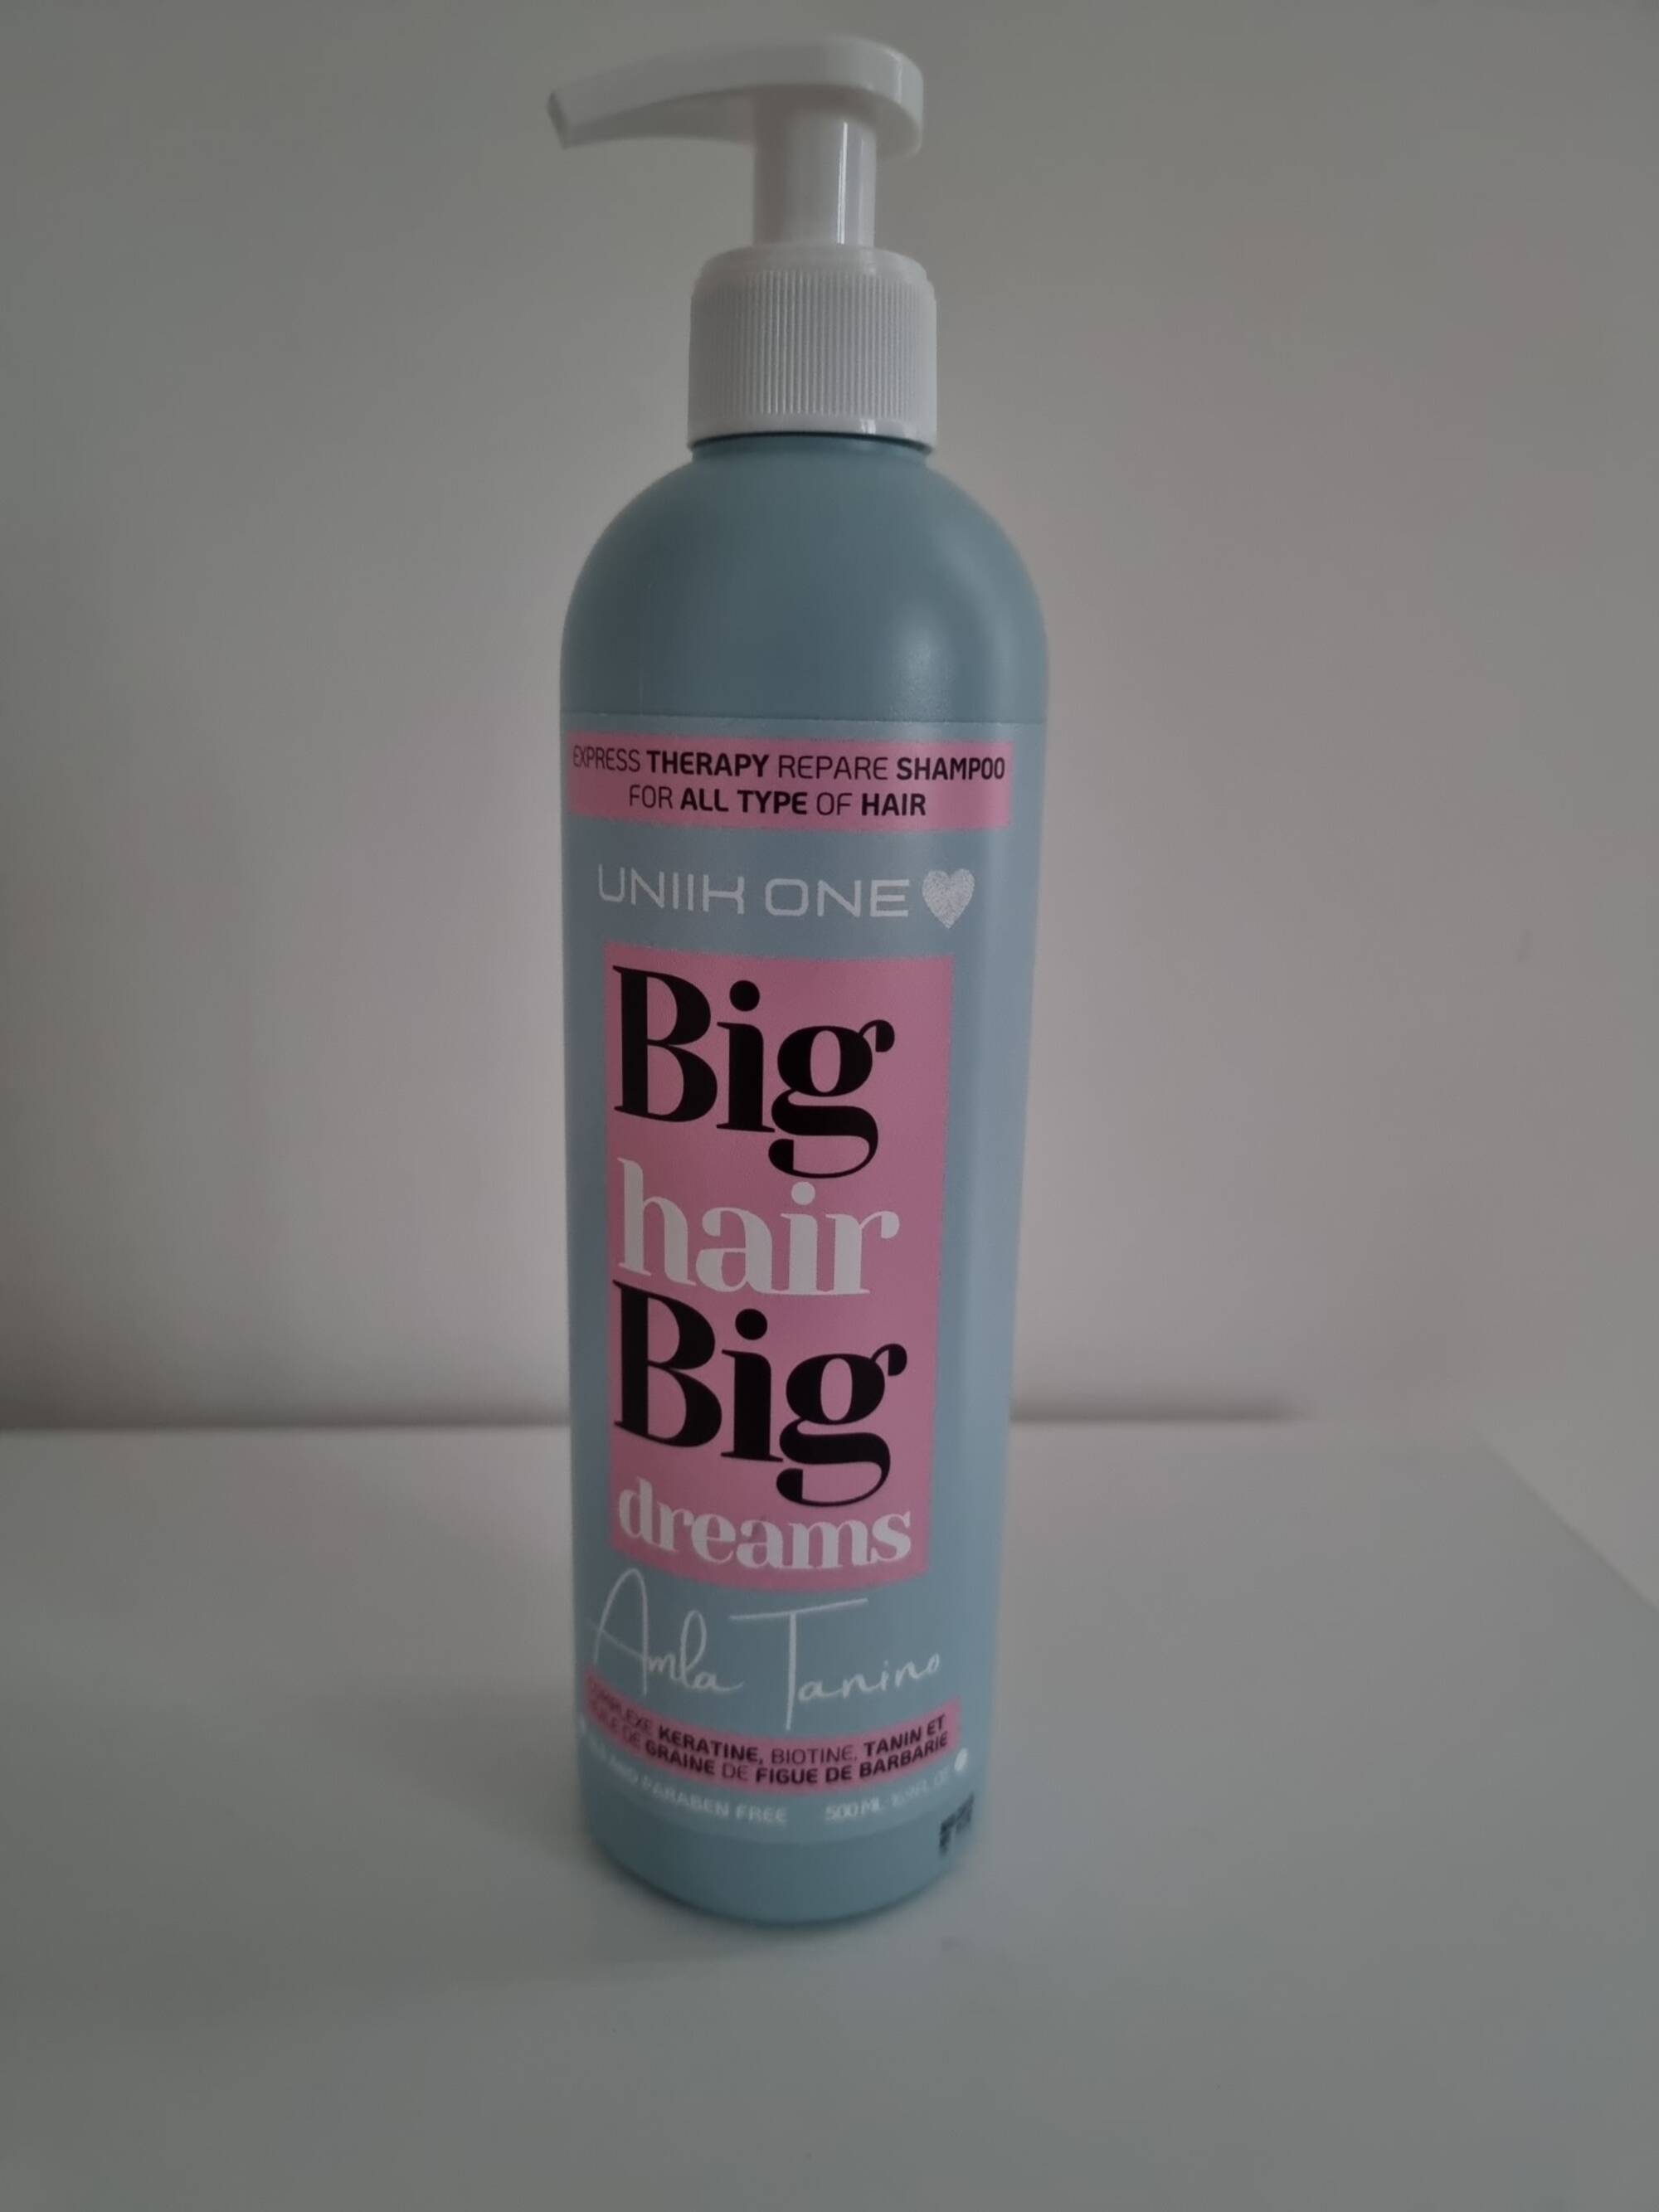 UNIIK ONE - Big hair big dreams - Shampoo for all type of hair